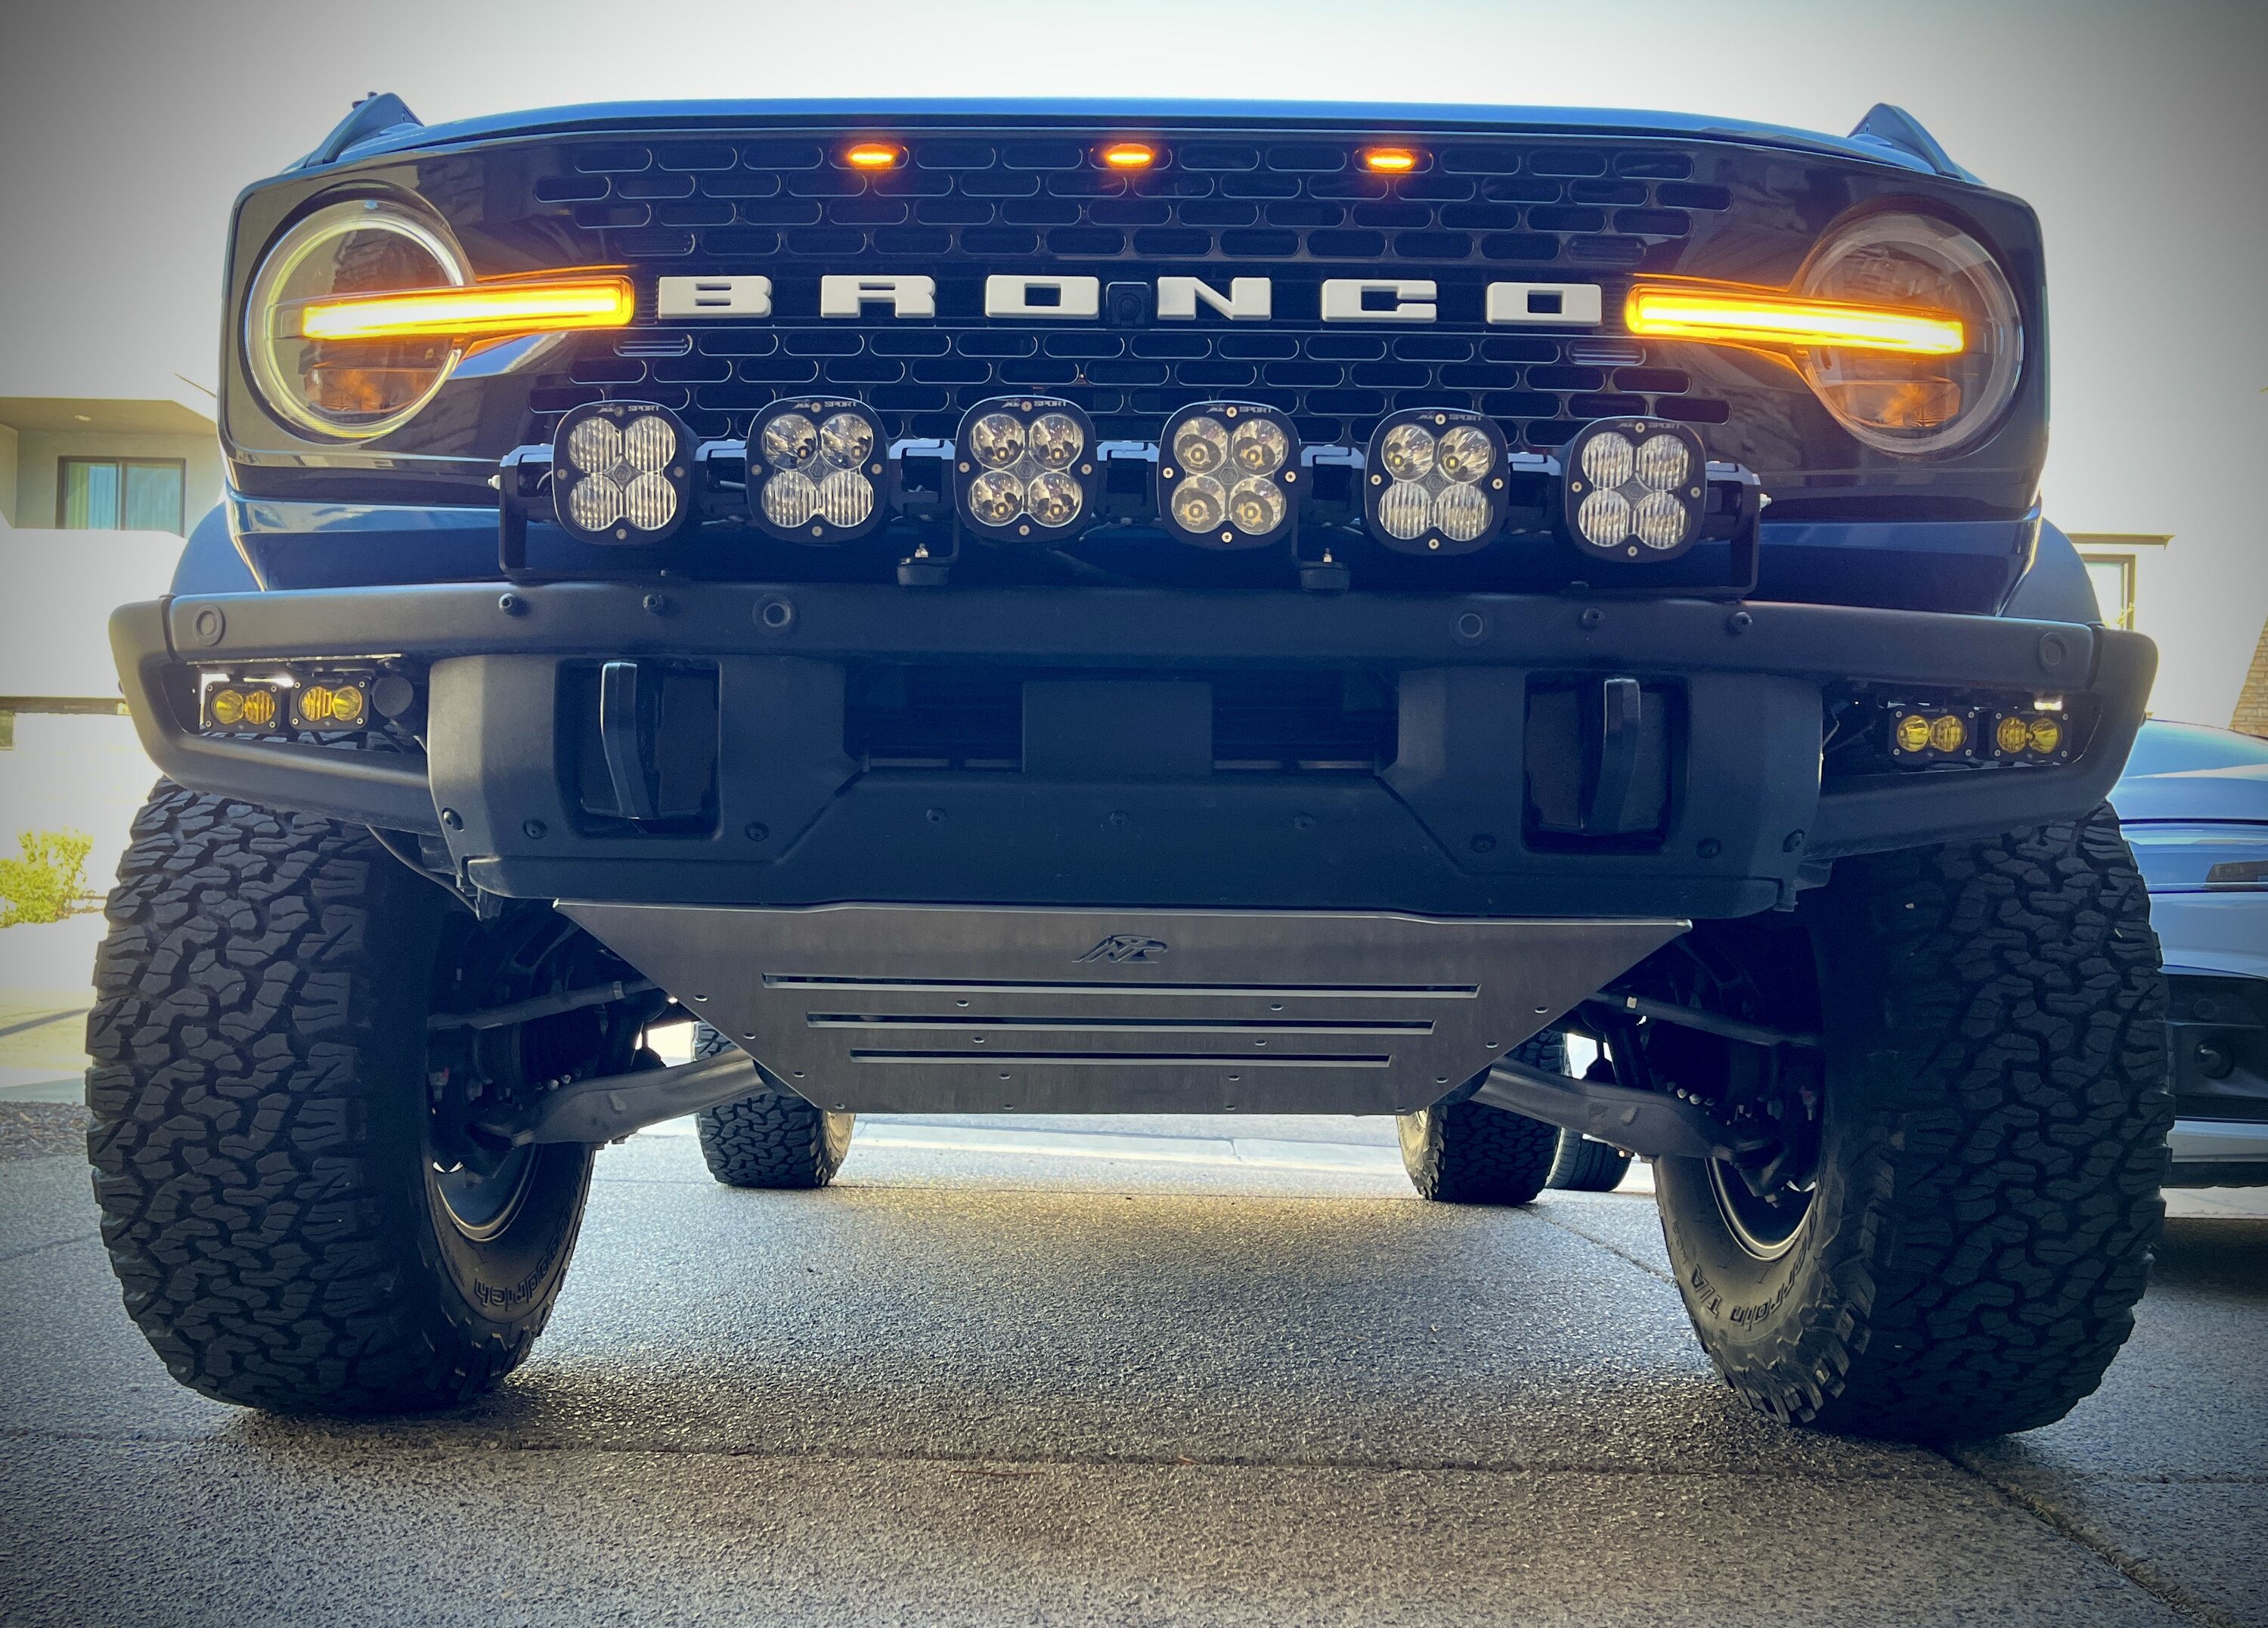 Ford Bronco First Edition 2-door build D0A08E0C-D49D-4273-9B2A-0ECE3E6E2EF4